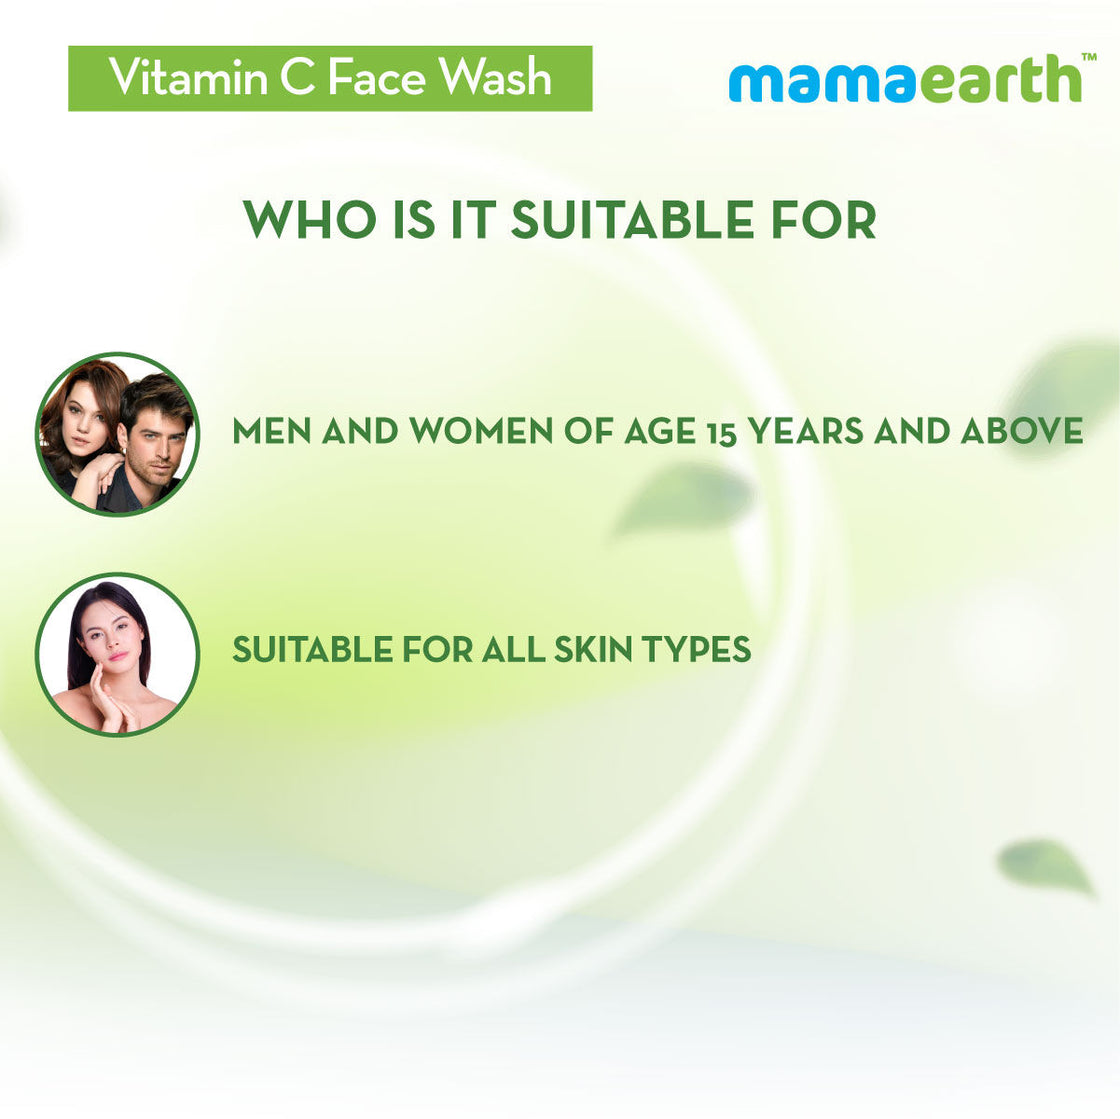 Mamaearth Vitamin C Face Wash With Vitamin C And Turmeric For Skin Illumination-5